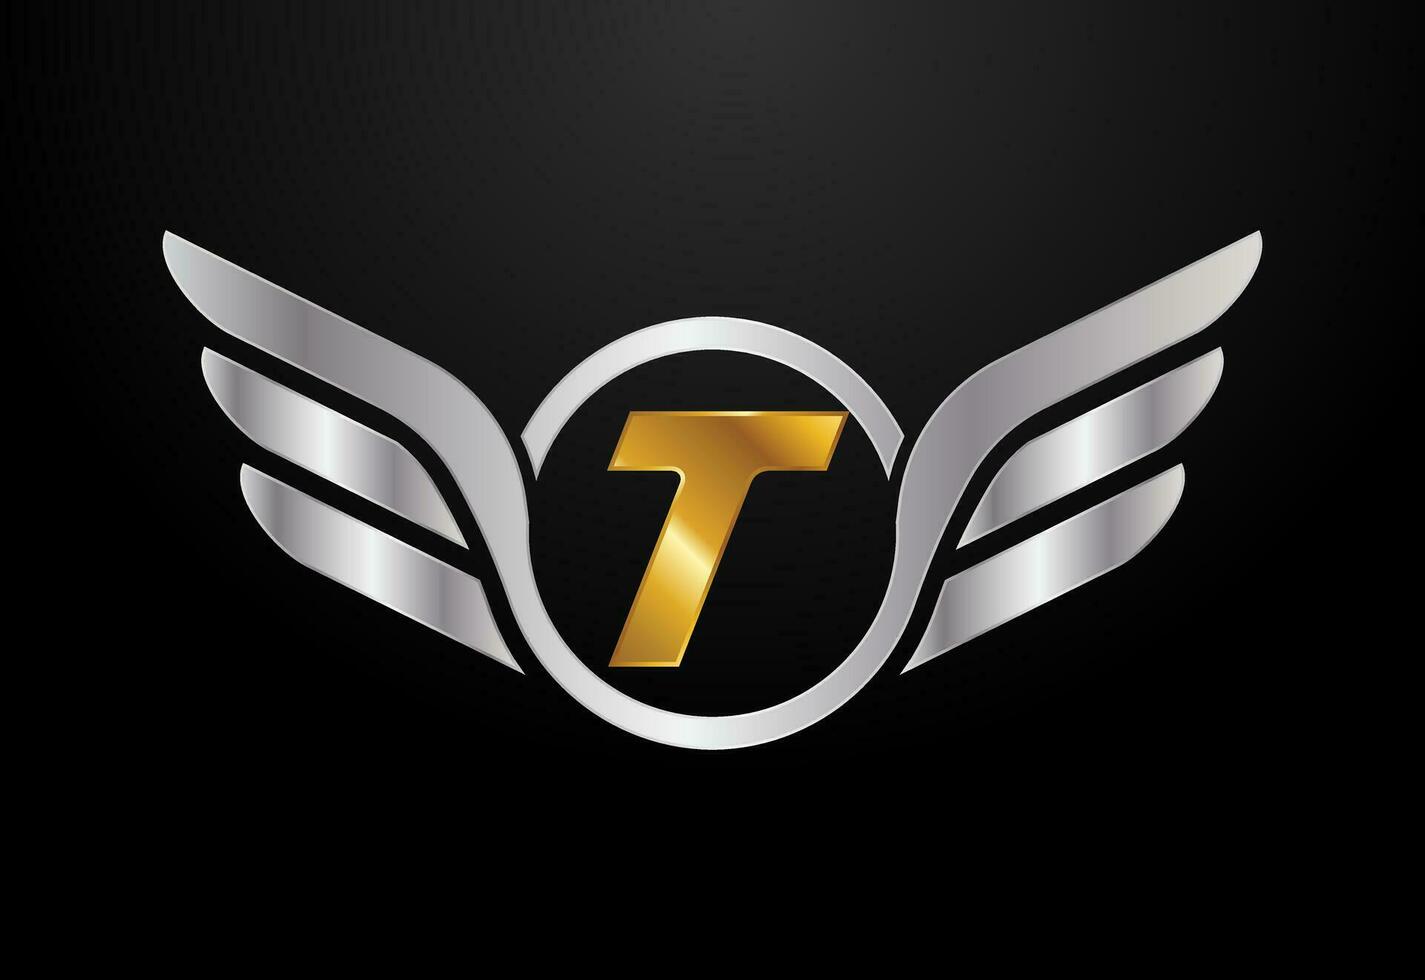 English alphabet T with wings logo design. Car and automotive vector logo concept